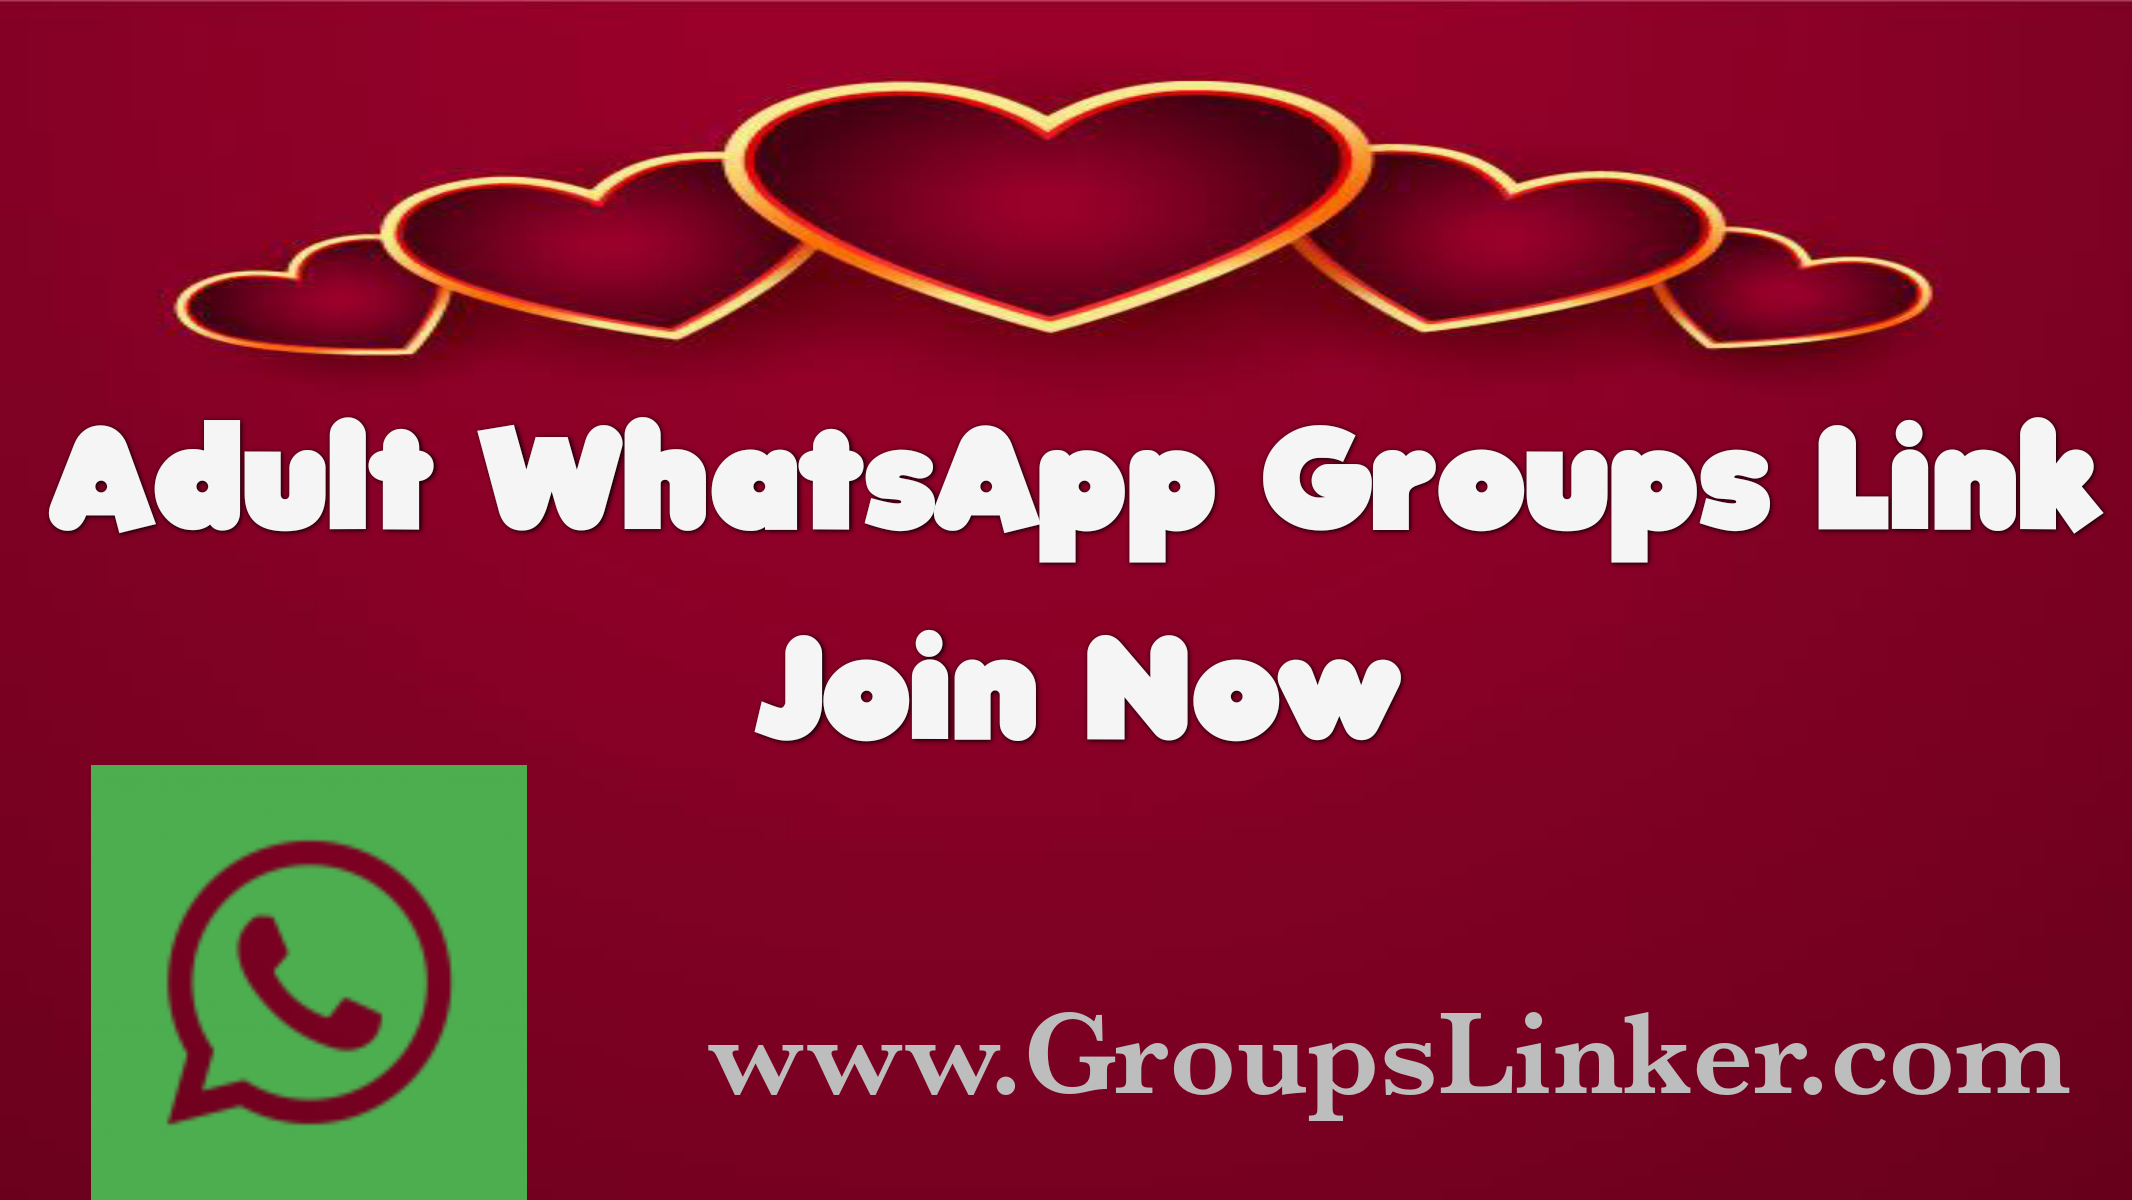 Adult WhatsApp Group